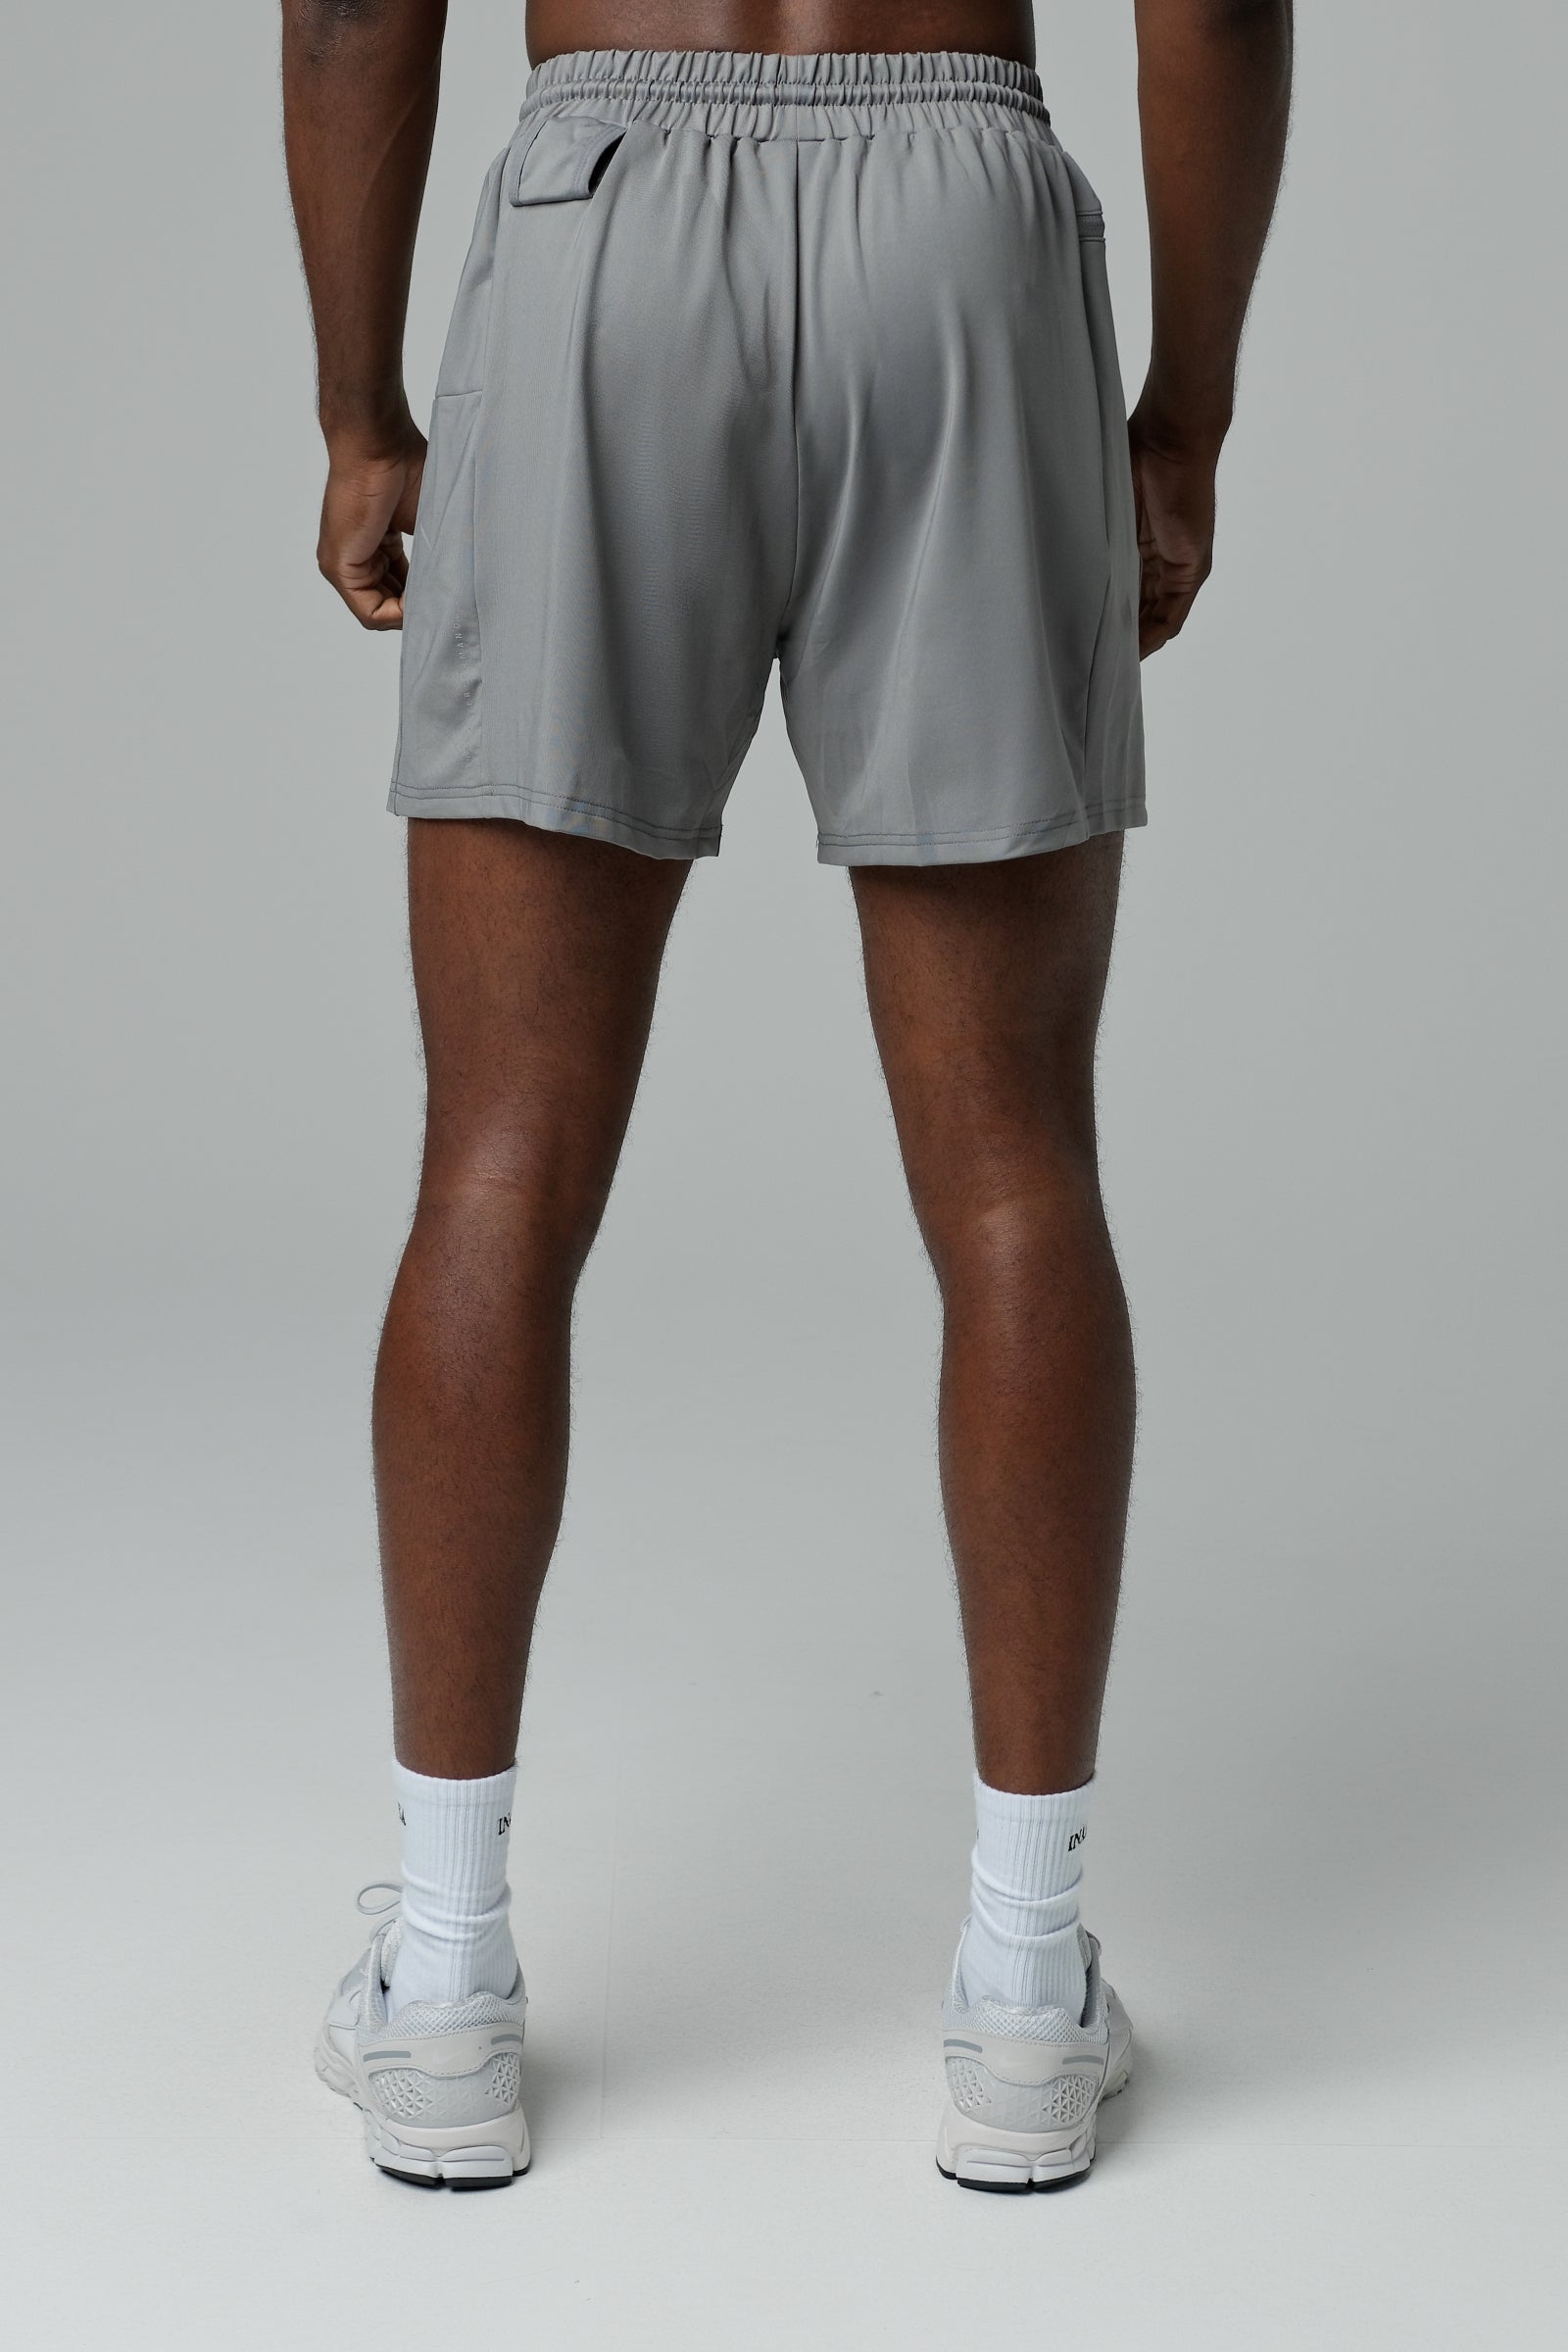 FreeForm Shorts Linerless - Steel Grey